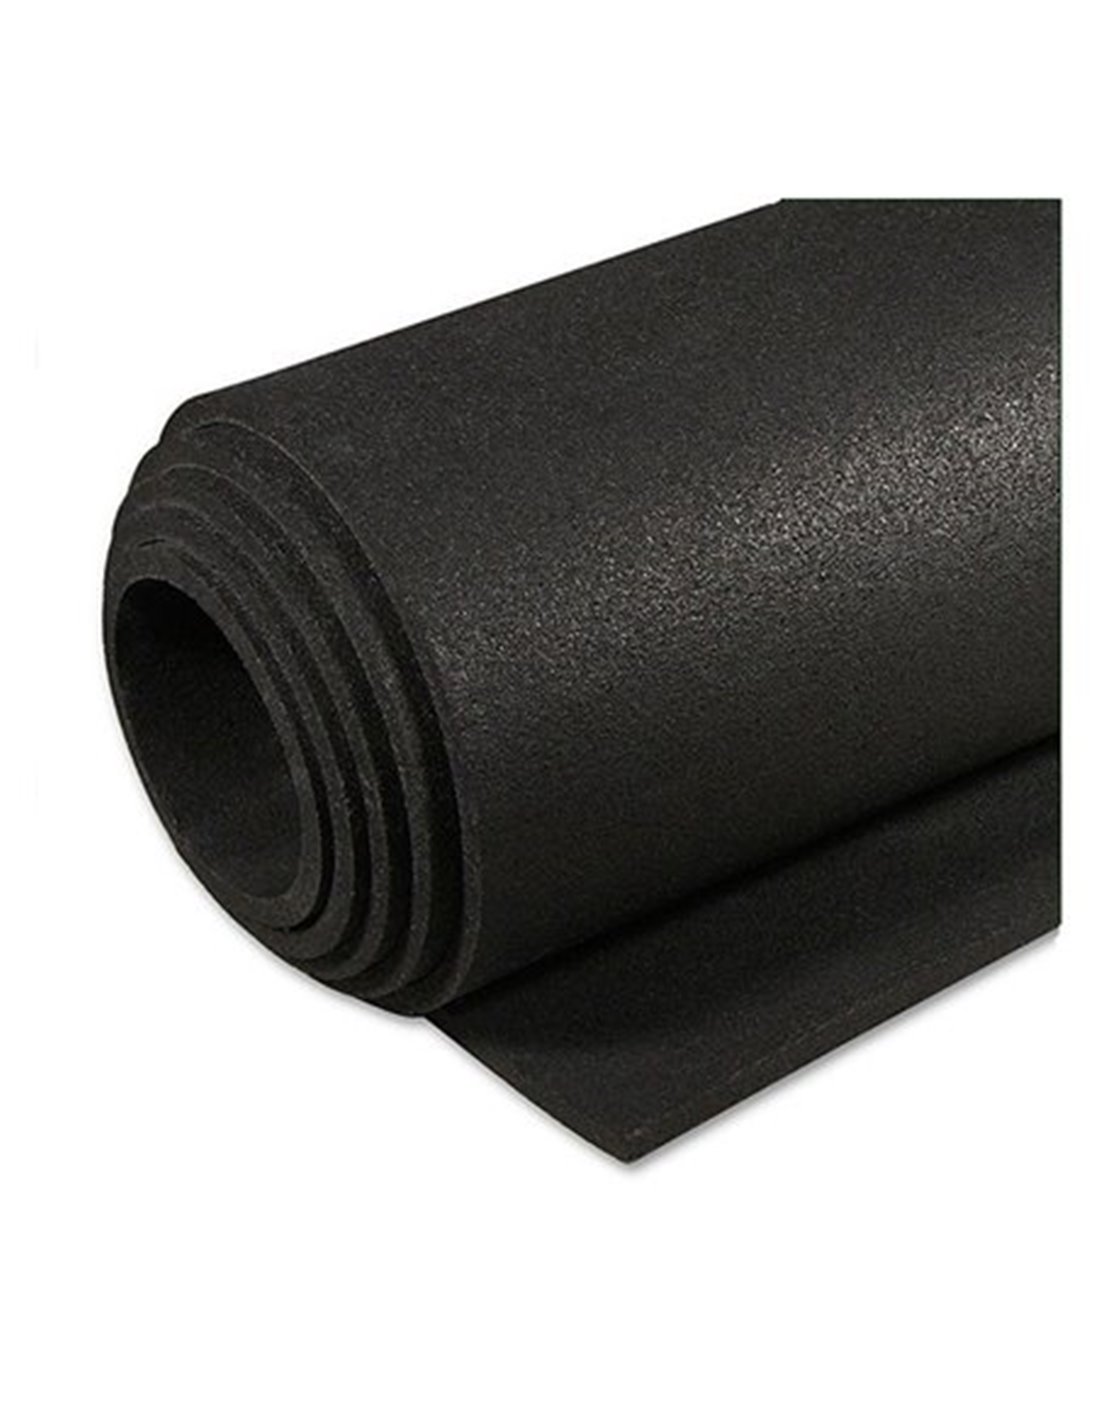 Suelo de caucho de gimnasio en loseta (100x100cm) alta densidad premium  negro - Viok Sport